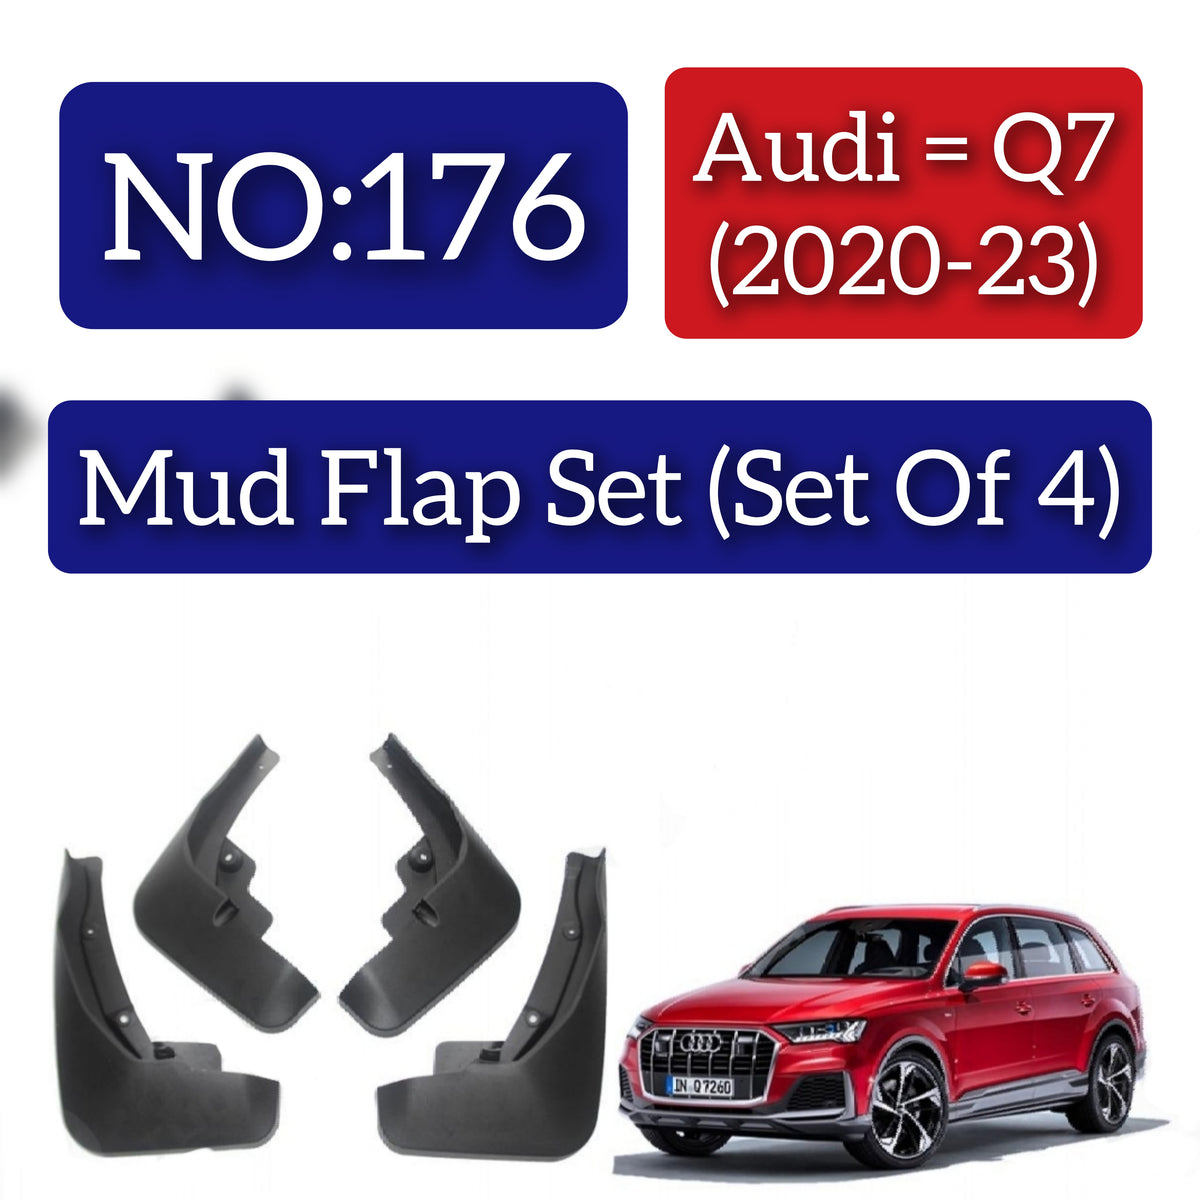 Audi Q7 (2020-23) Mud Flap Set (Set of 4)  Tag 176